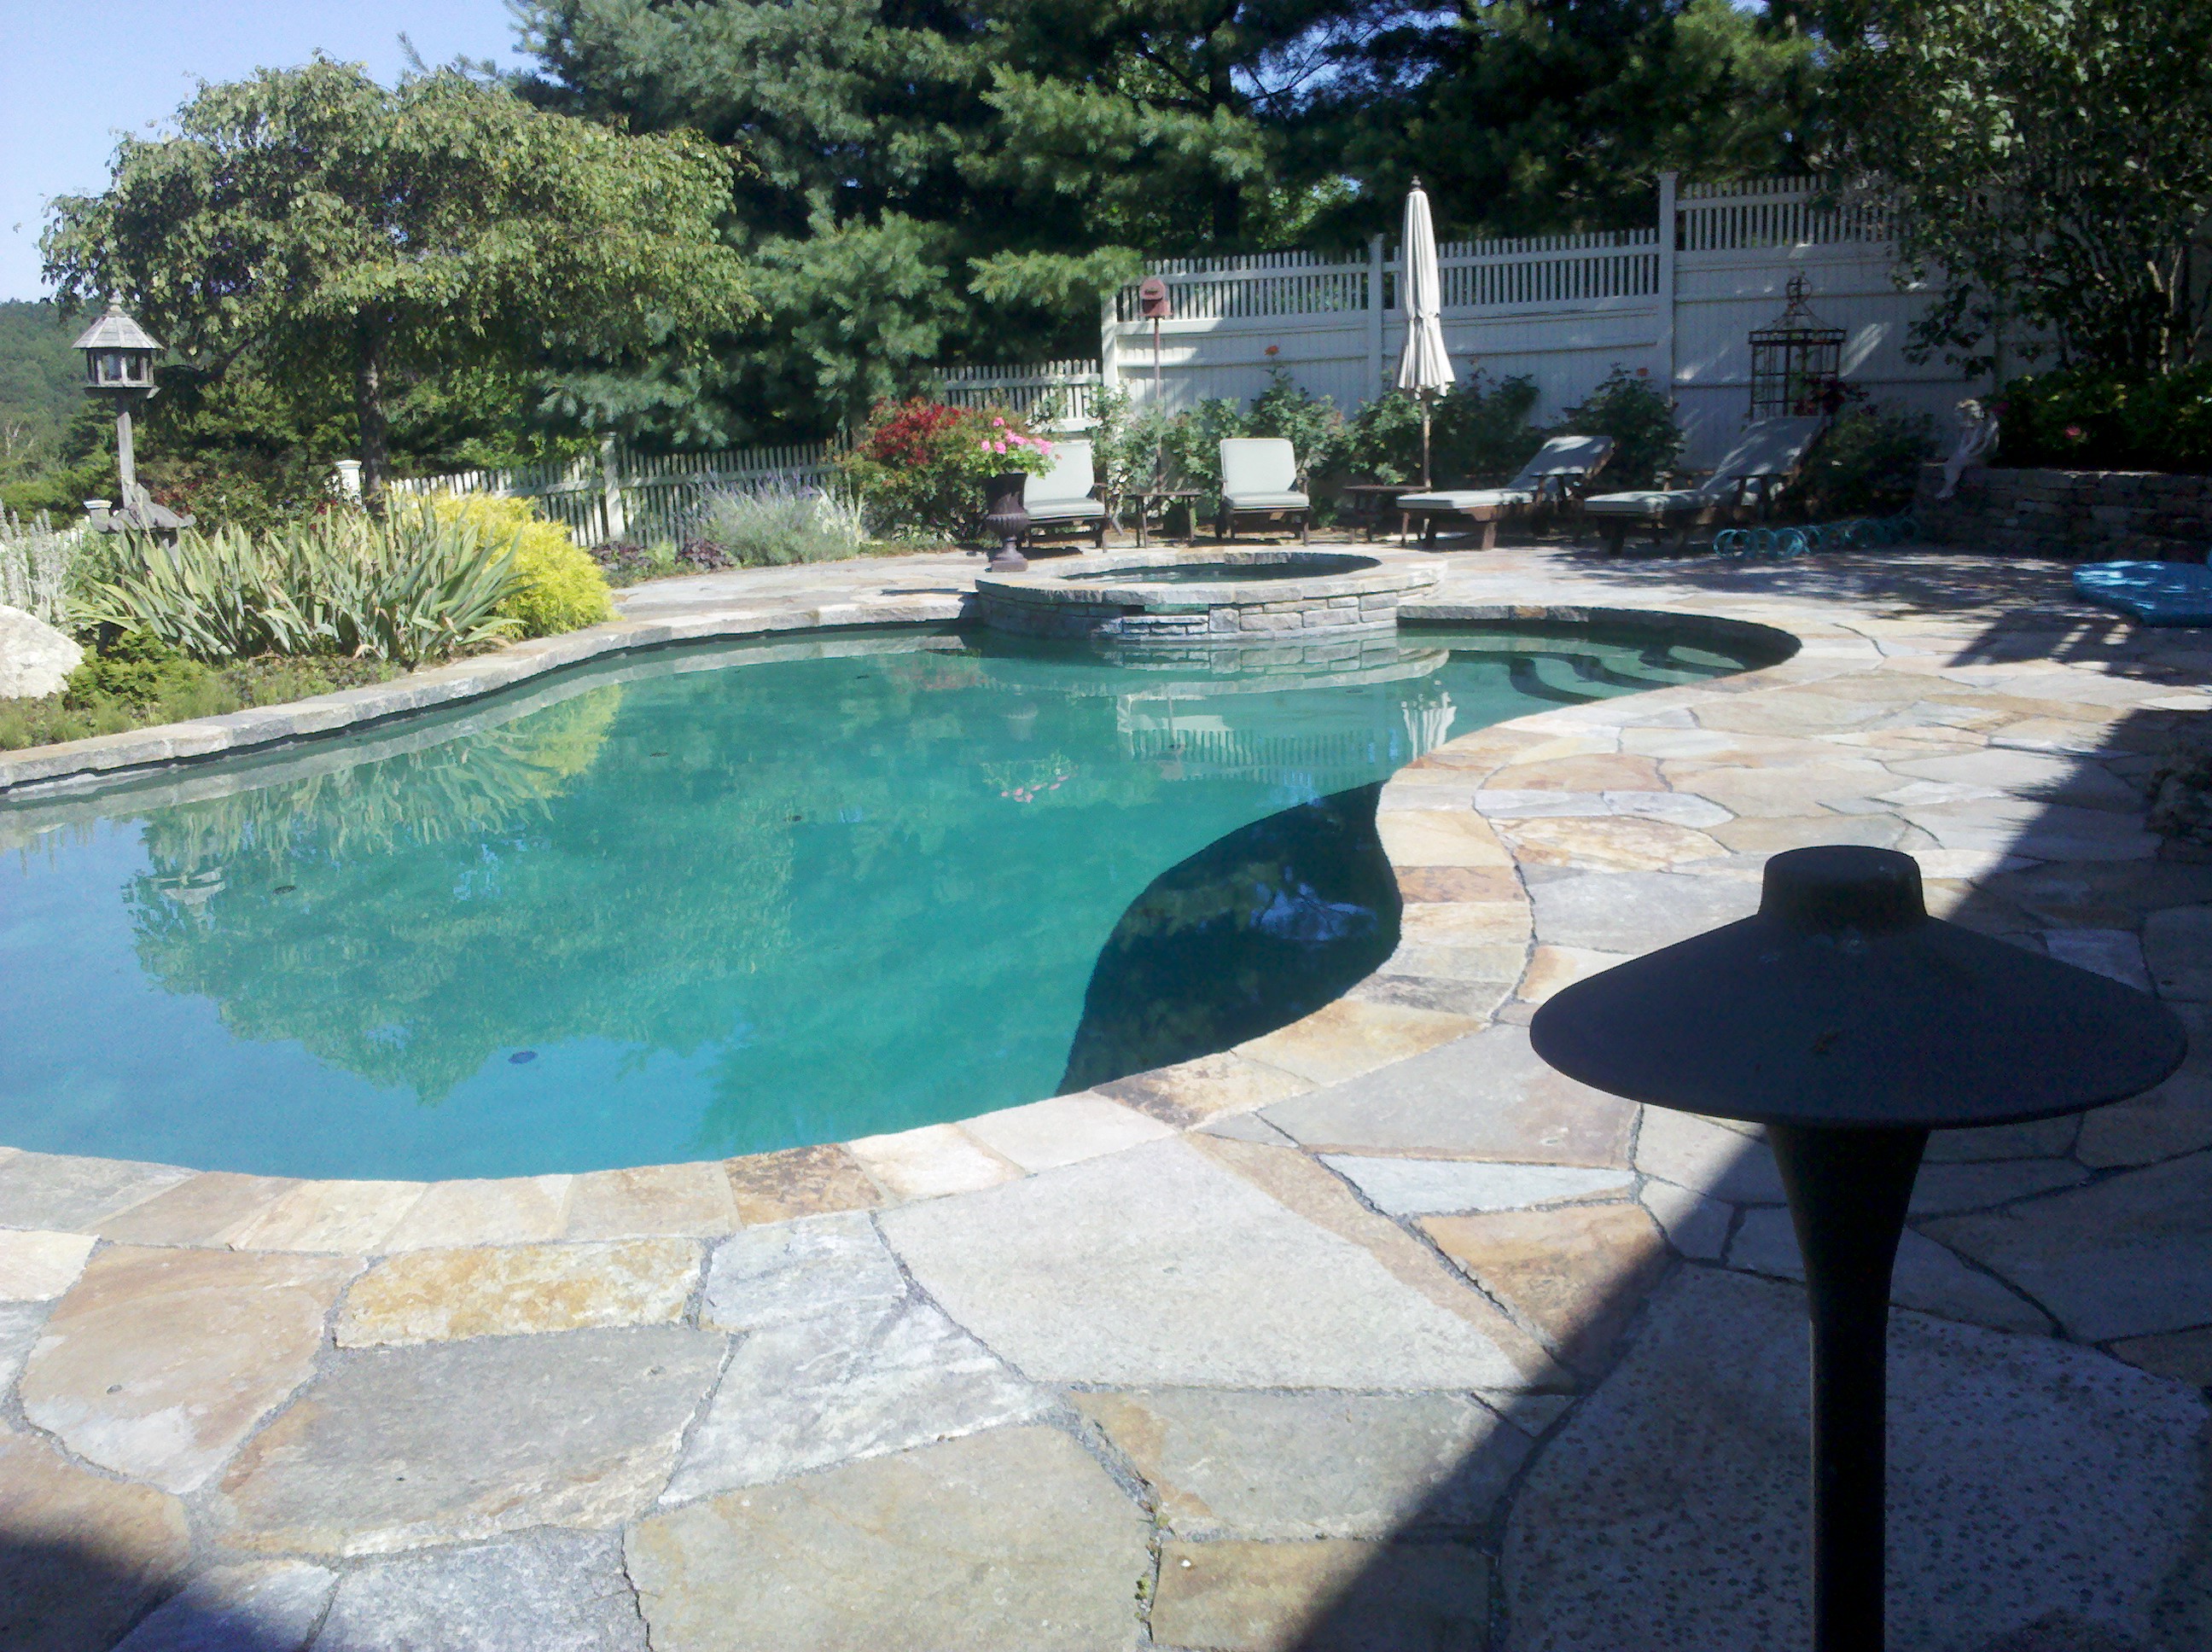 Stone masonry repair needed on this pool deck and patio. Masonry ...